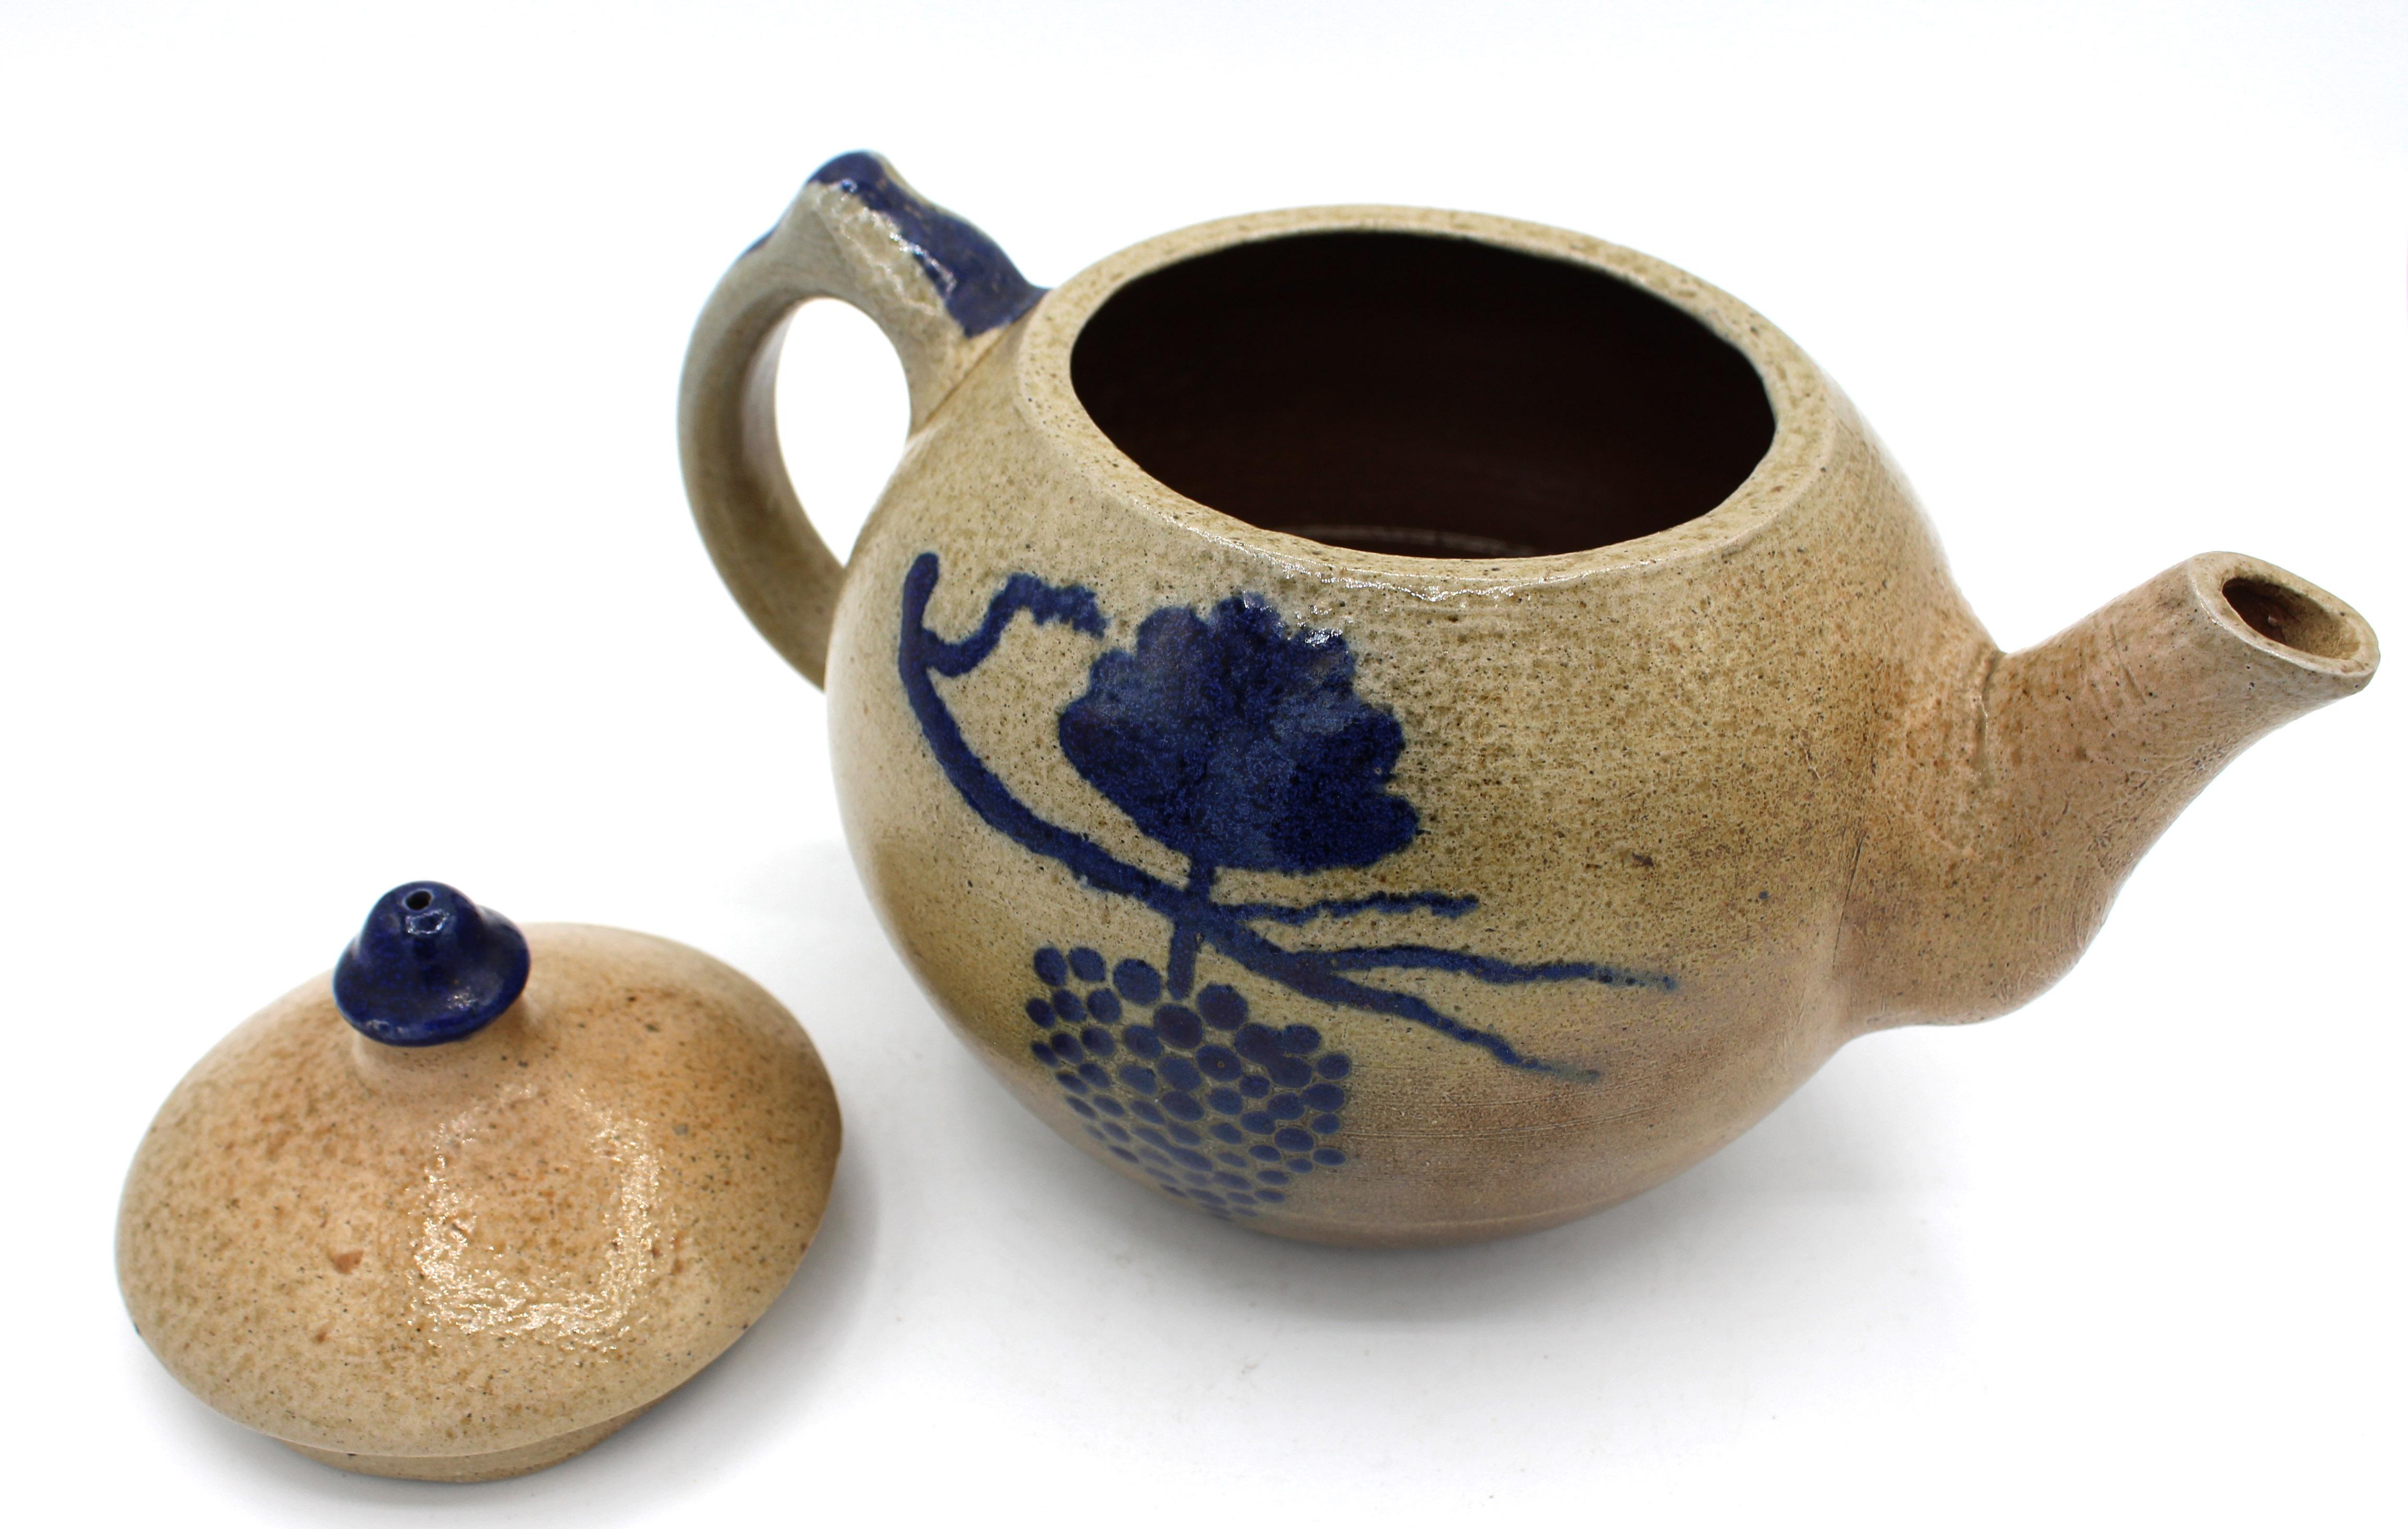 1962-1970 salt glazed pottery tea pot by Ben Owen I, Seagrove, NC. Marked 